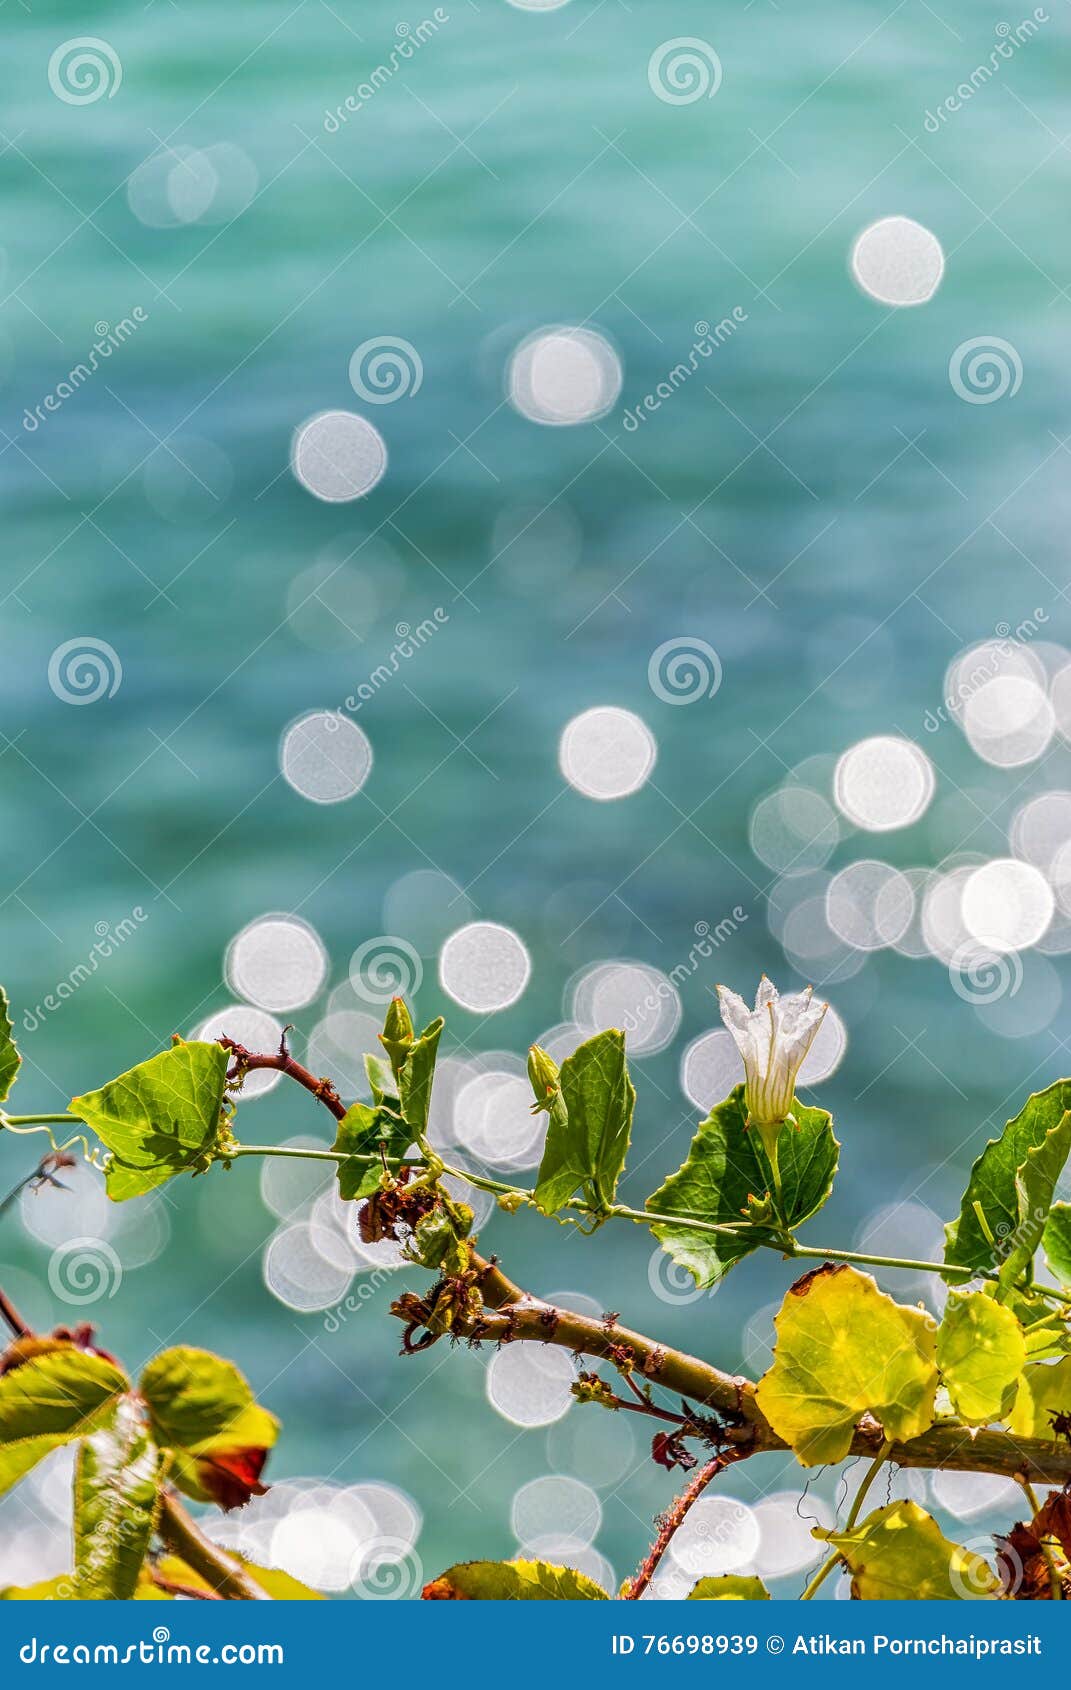 Ivy sea stock image. Image of beauty, farm, fresh, hope - 76698939